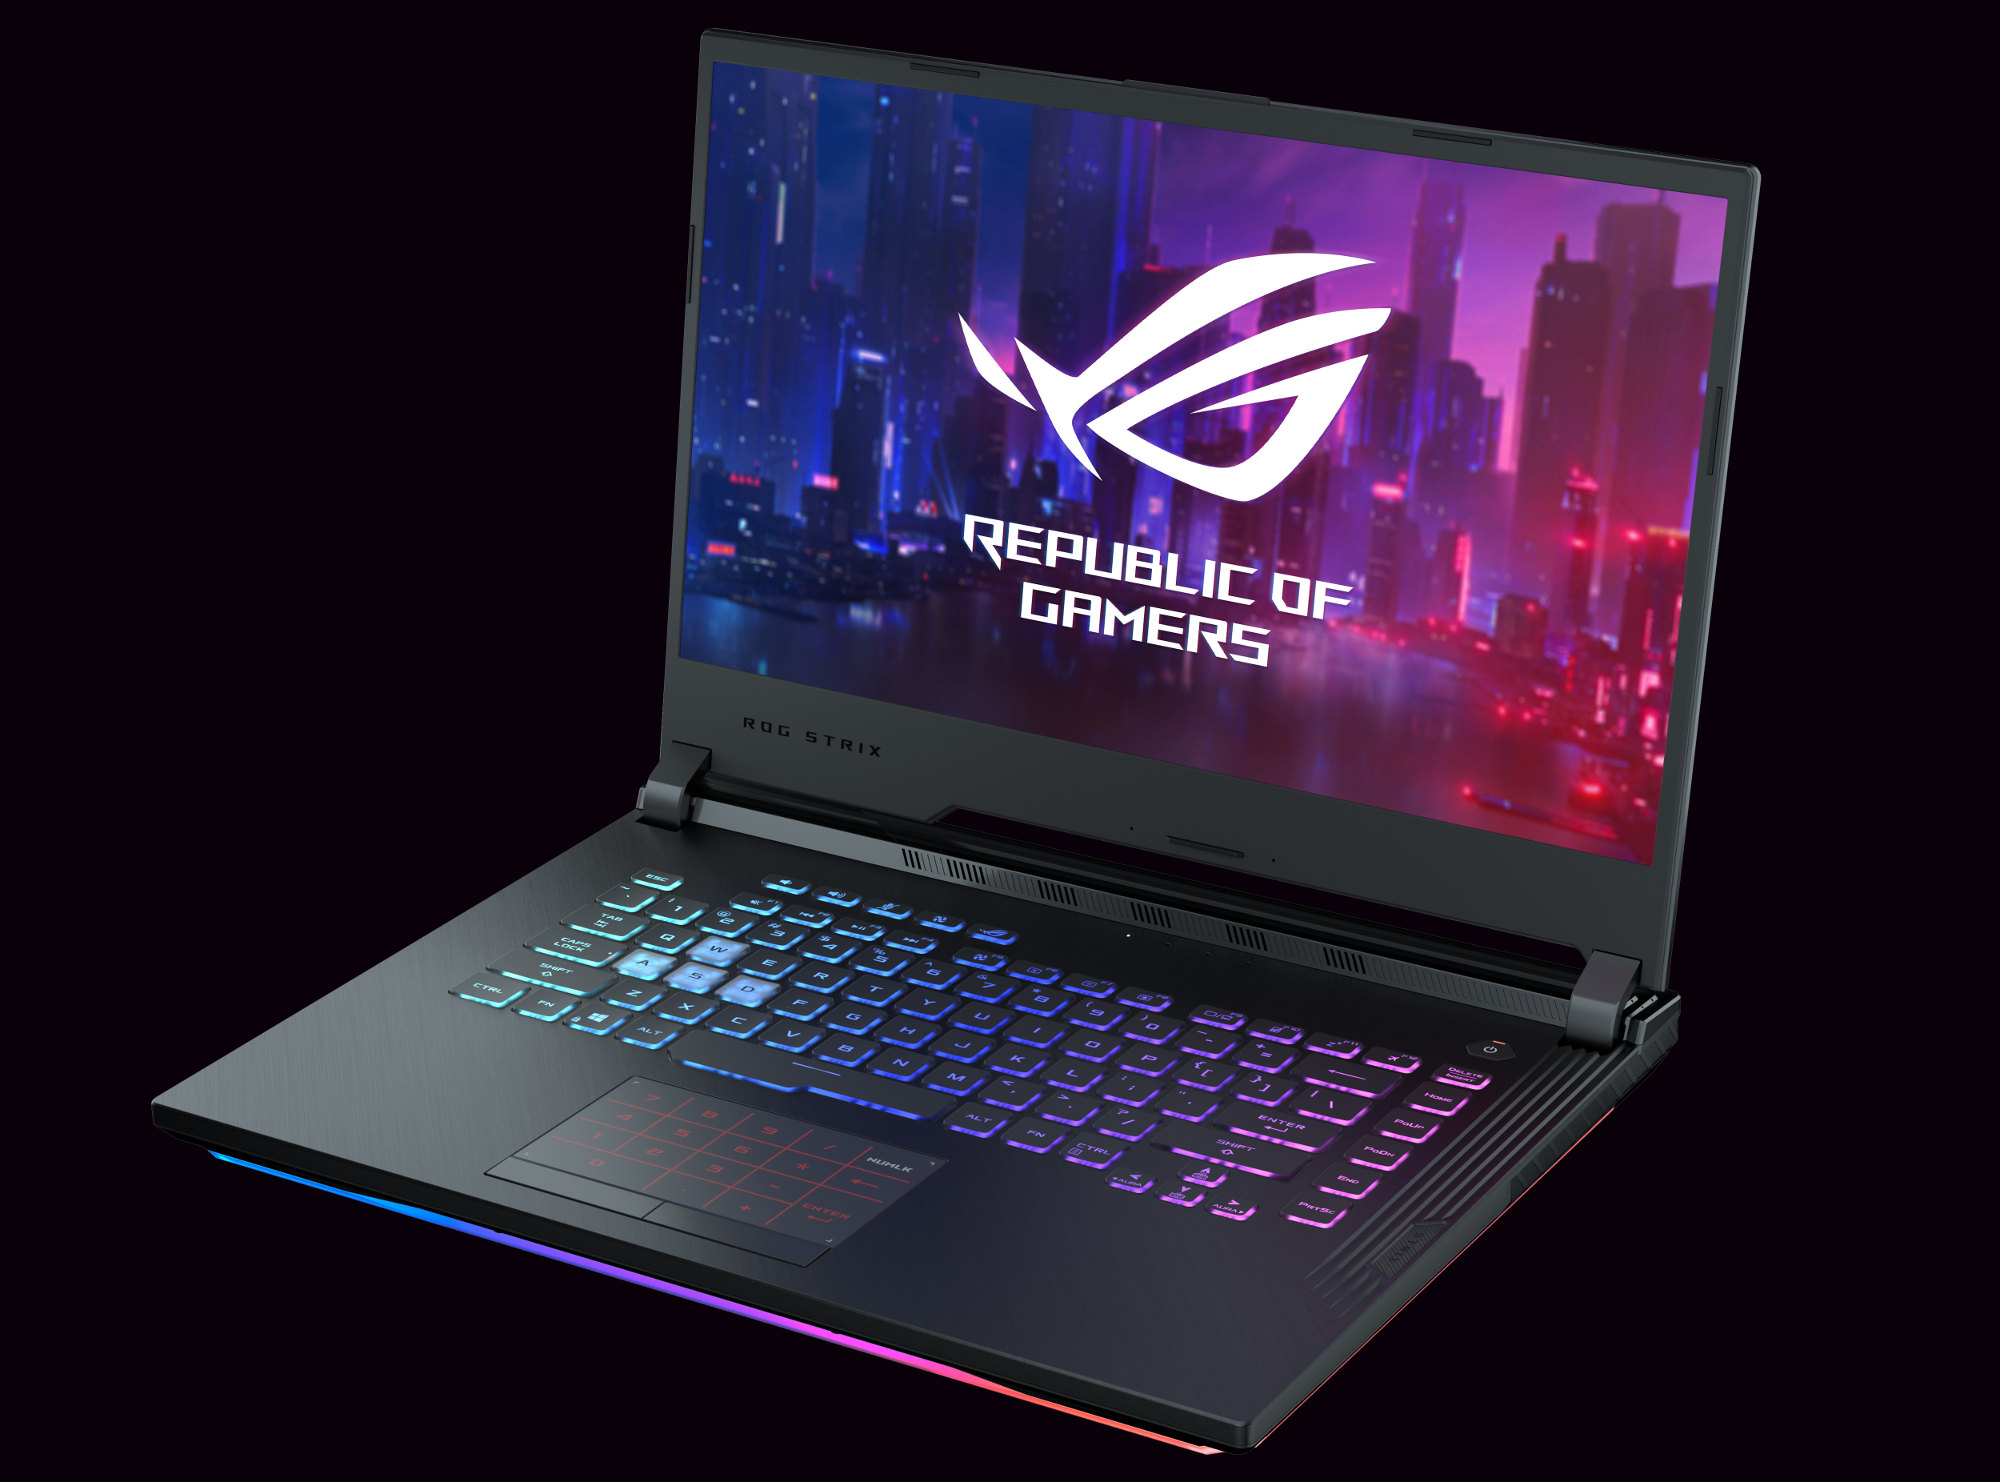 The ROG Strix G brings gaming fundamentals to affordable laptops 